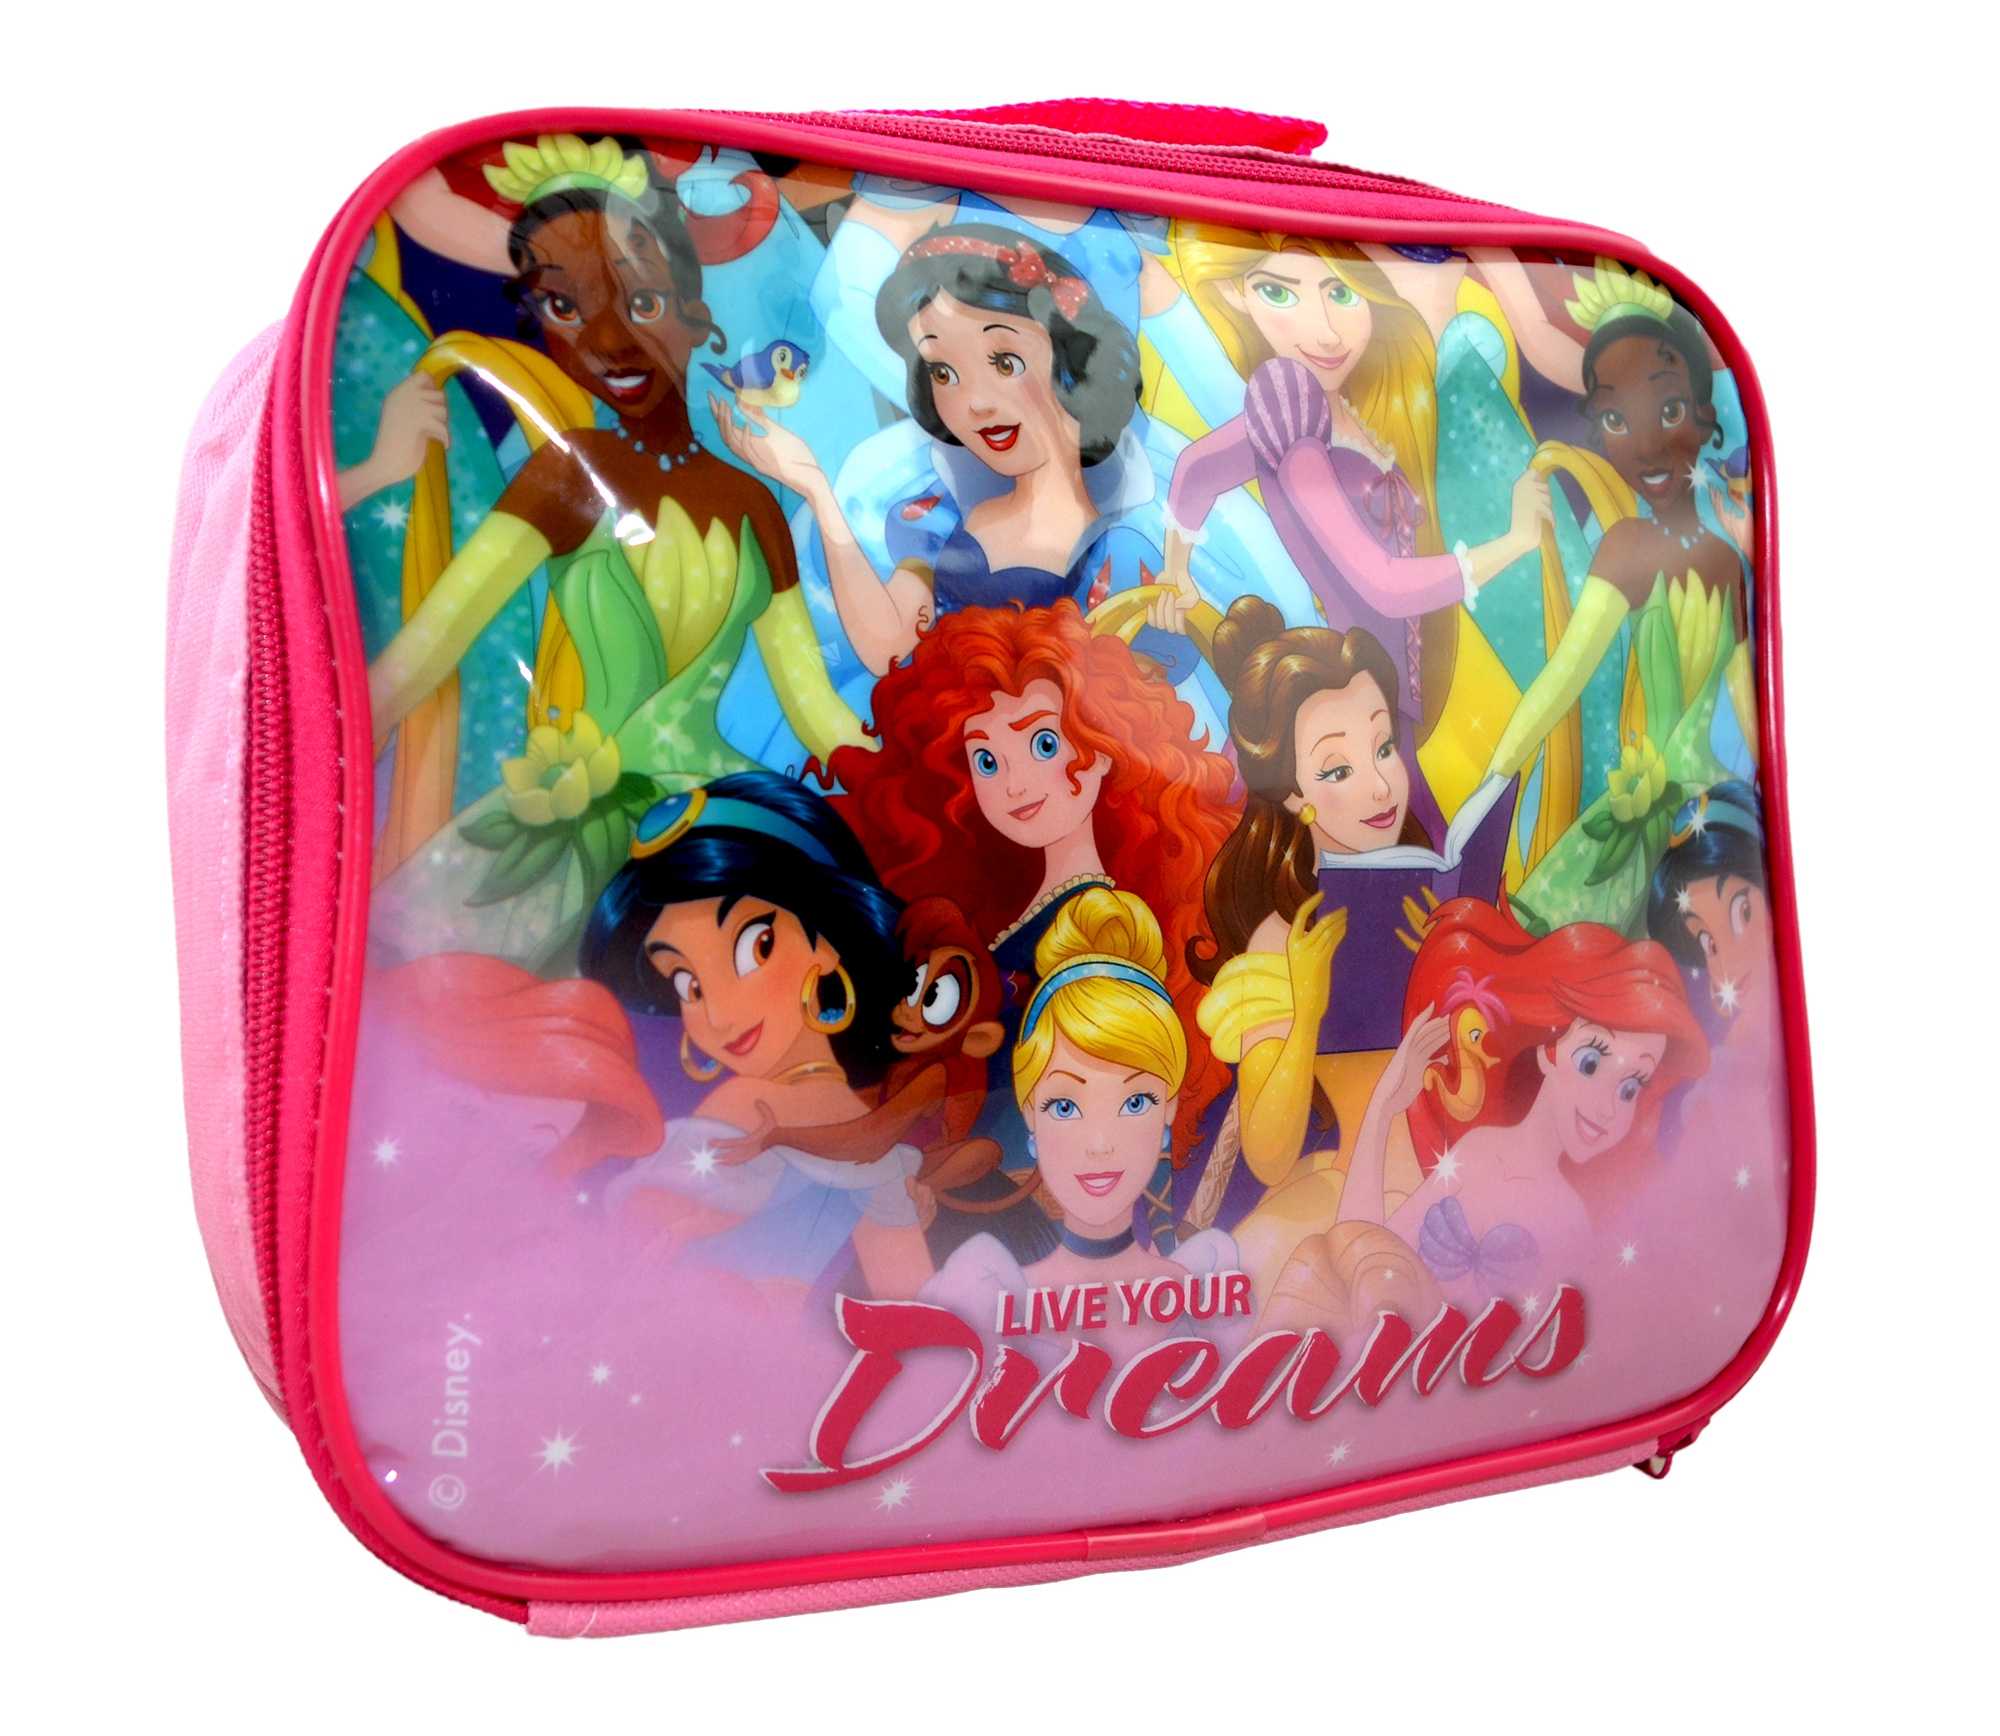 Disney Princess 'Live Your Dreams' School Rectangle Lunch Bag